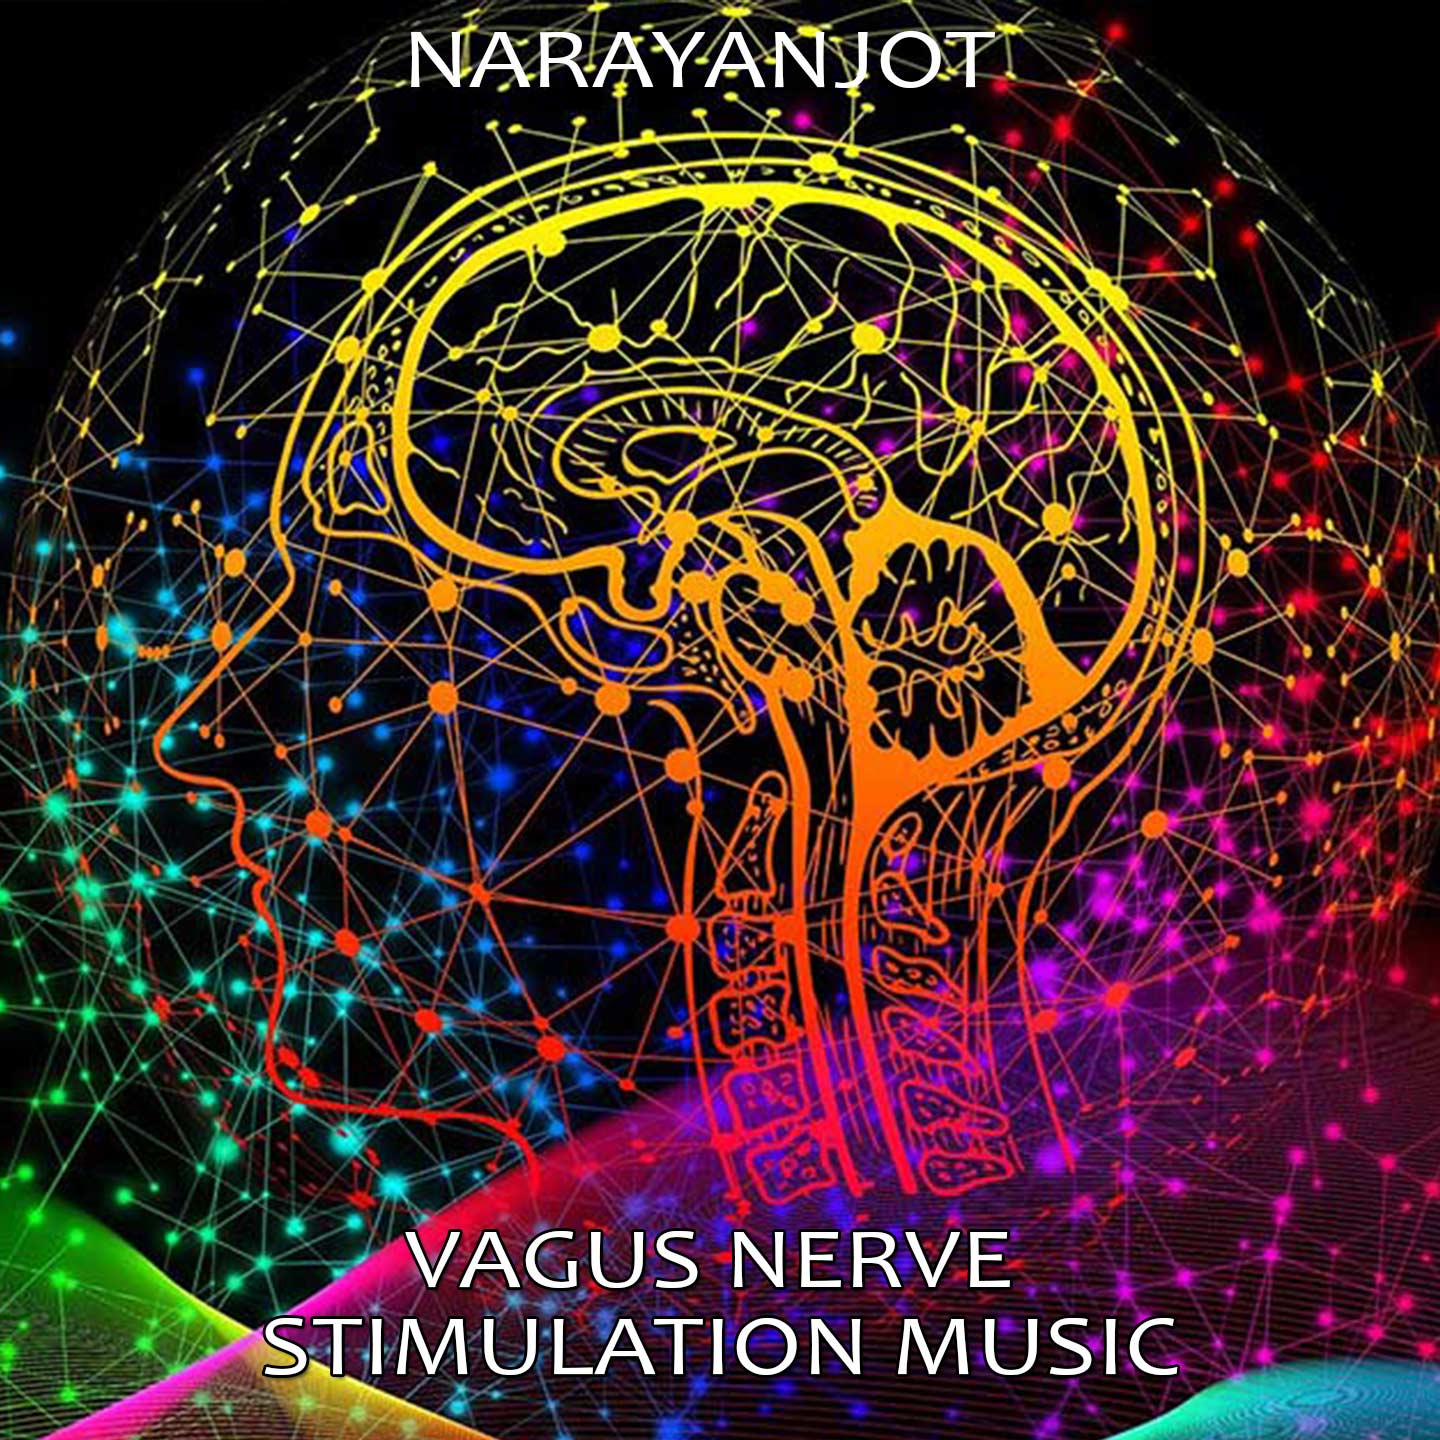 Vagus Nerve Stimulation Music